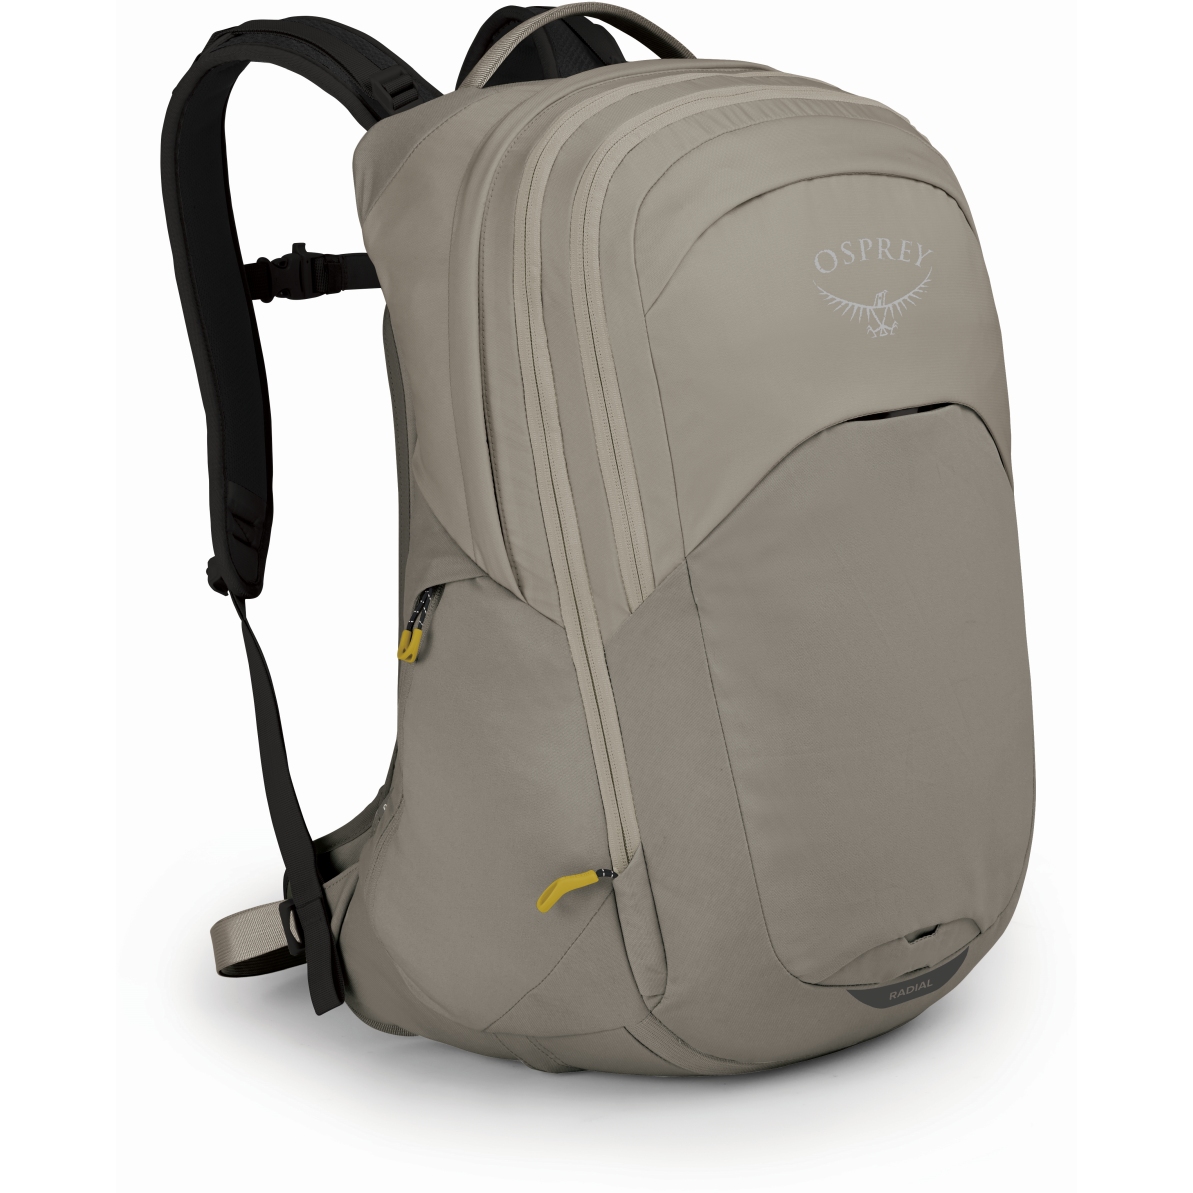 Productfoto van Osprey Radial 26+8 Backpack - Tan Concrete